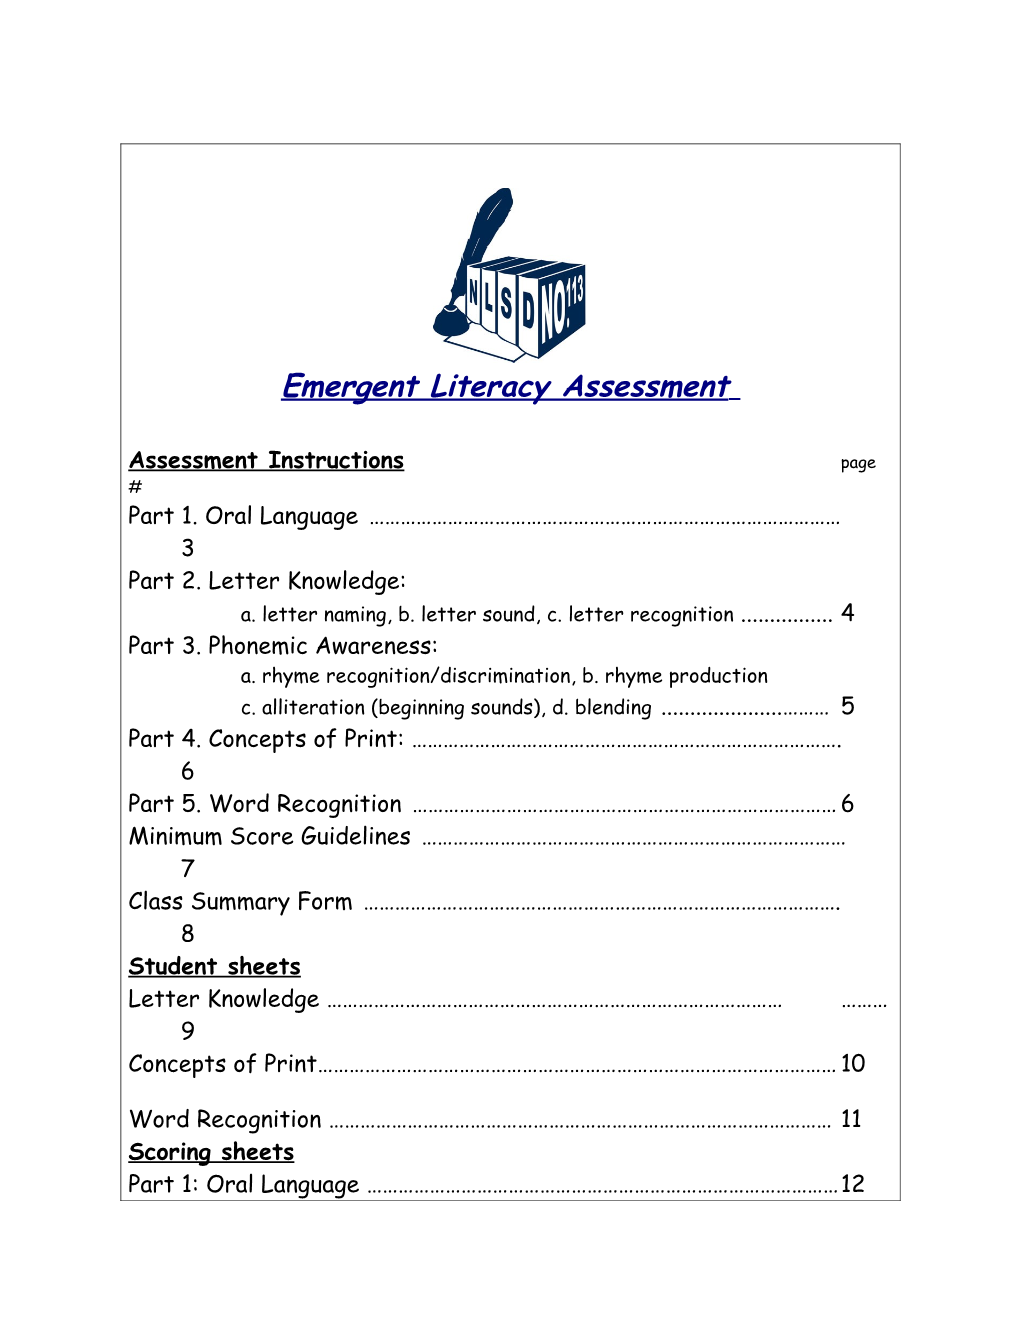 Emergent Literacy Assessment - Instructions